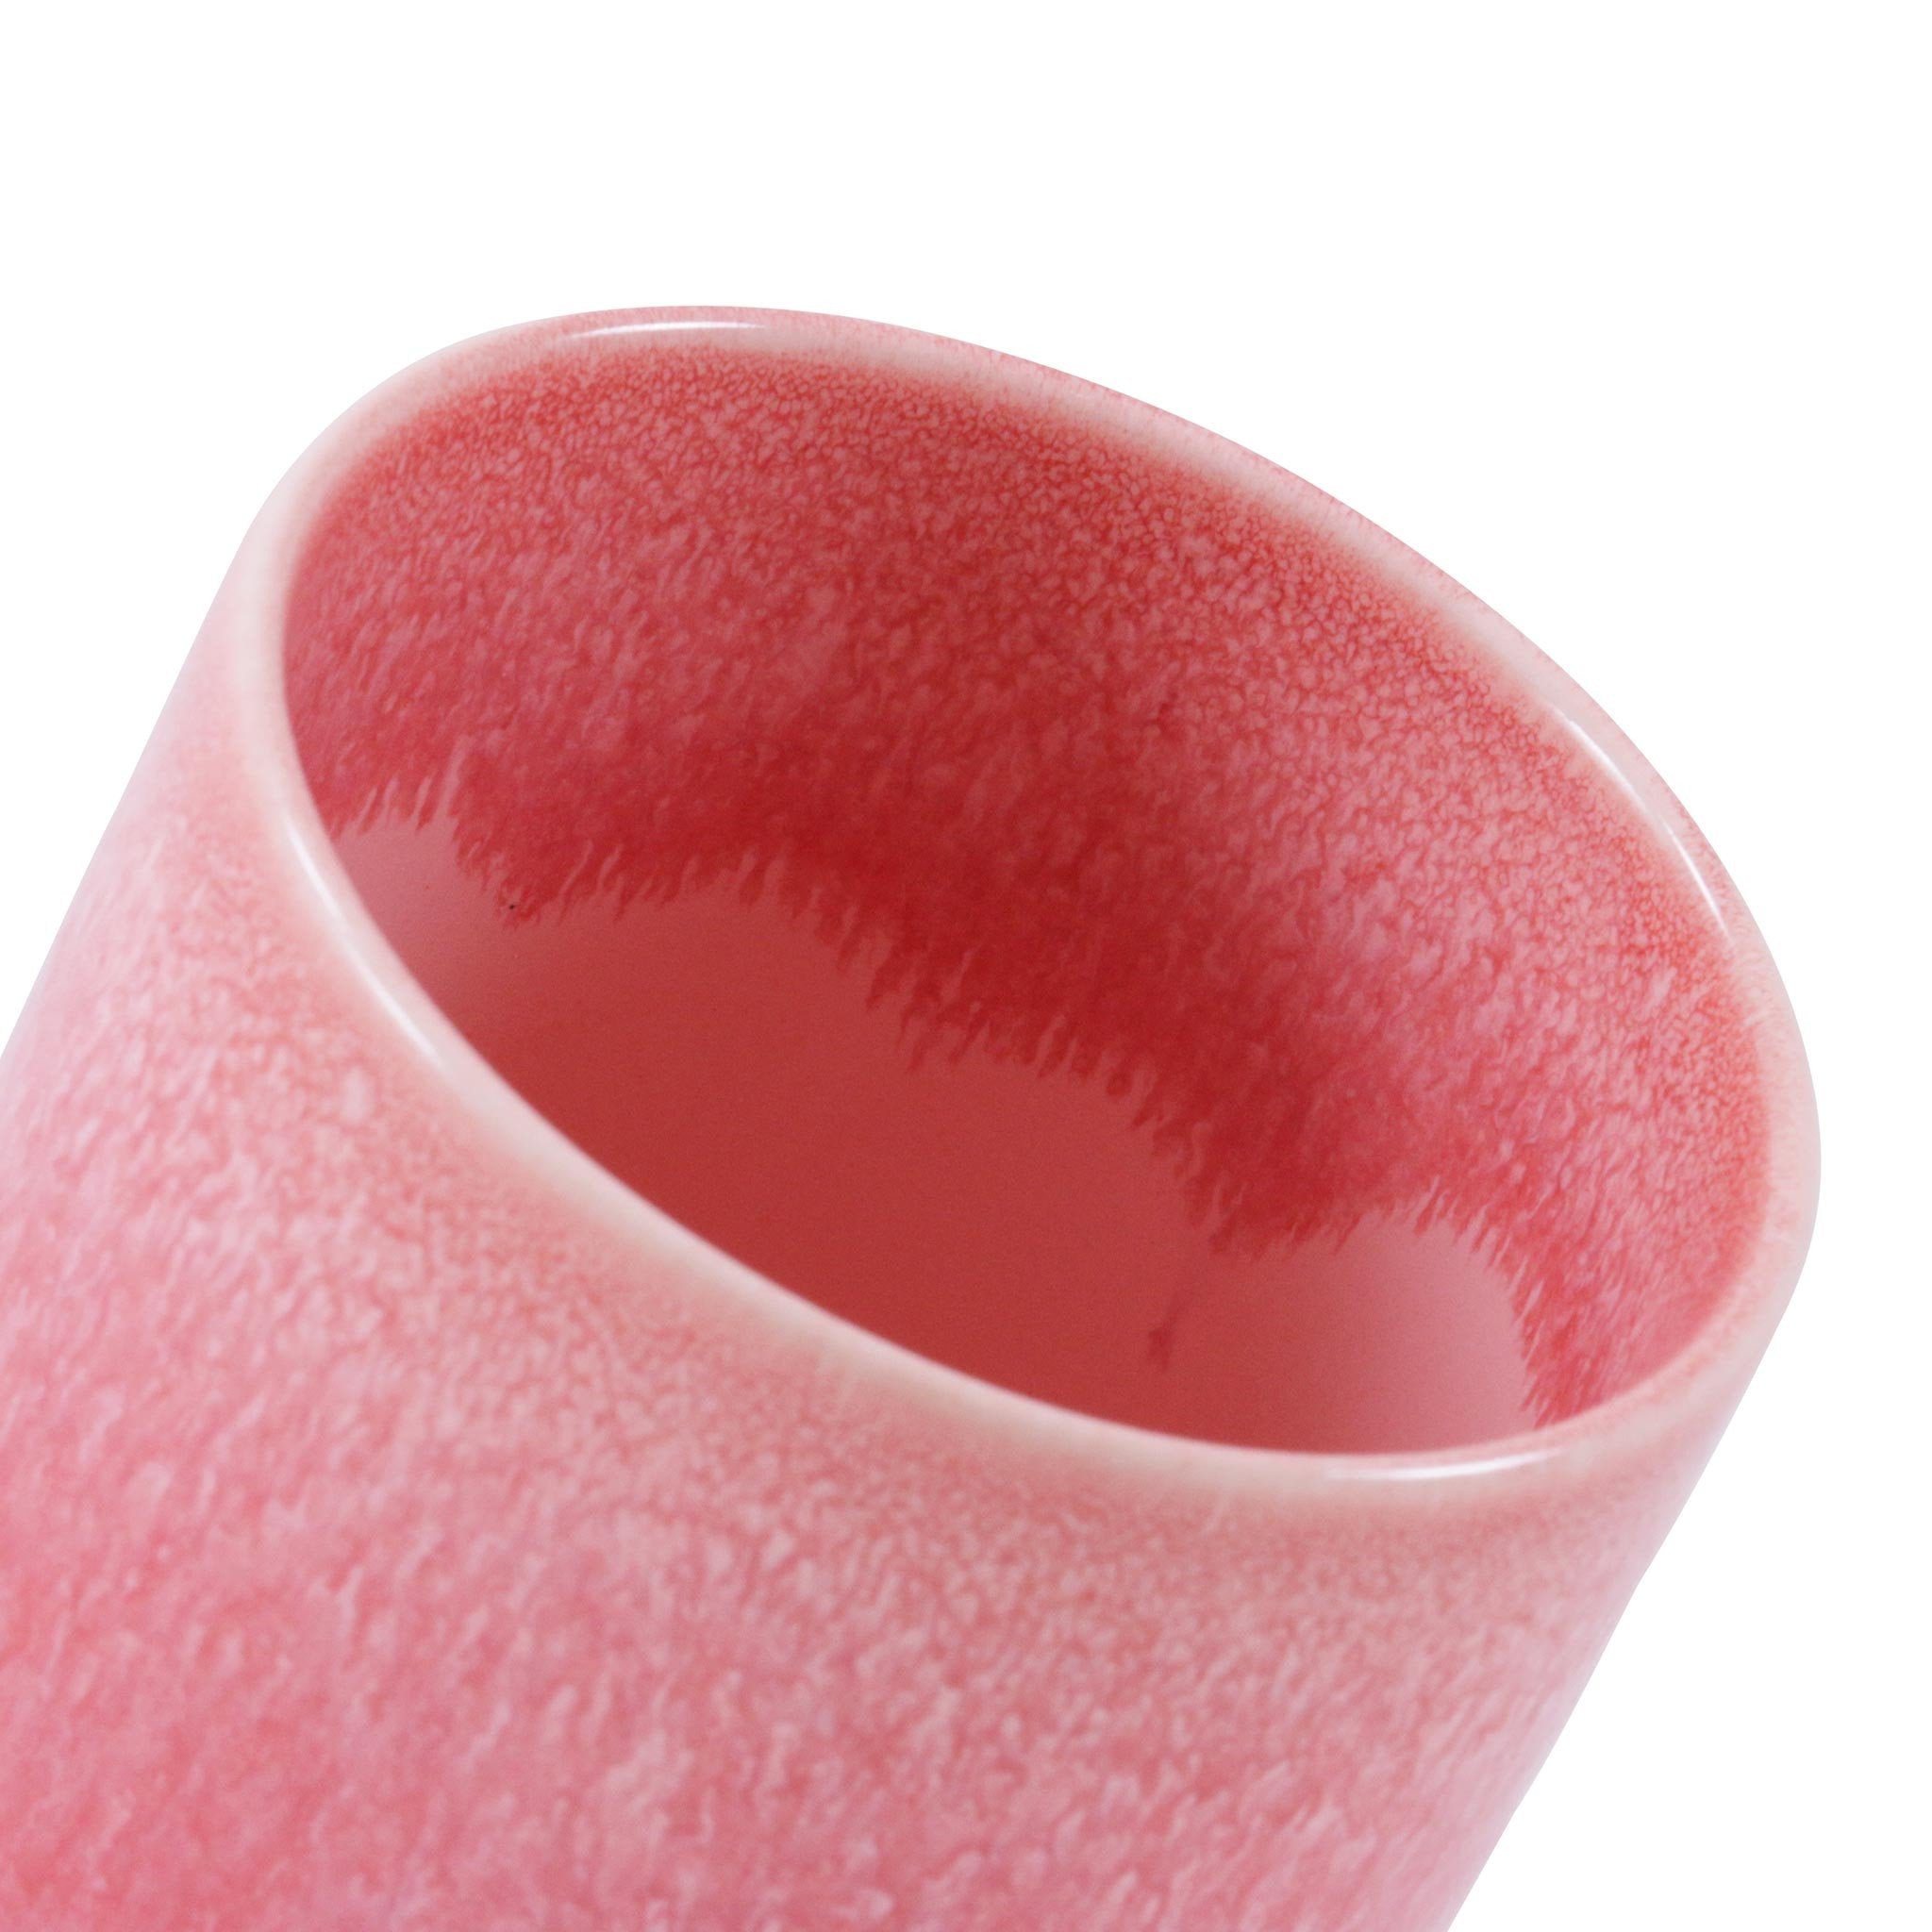 Slurp Cup | Red Raspberry Sorbet | by Studio Arhoj - Lifestory - Studio Arhoj